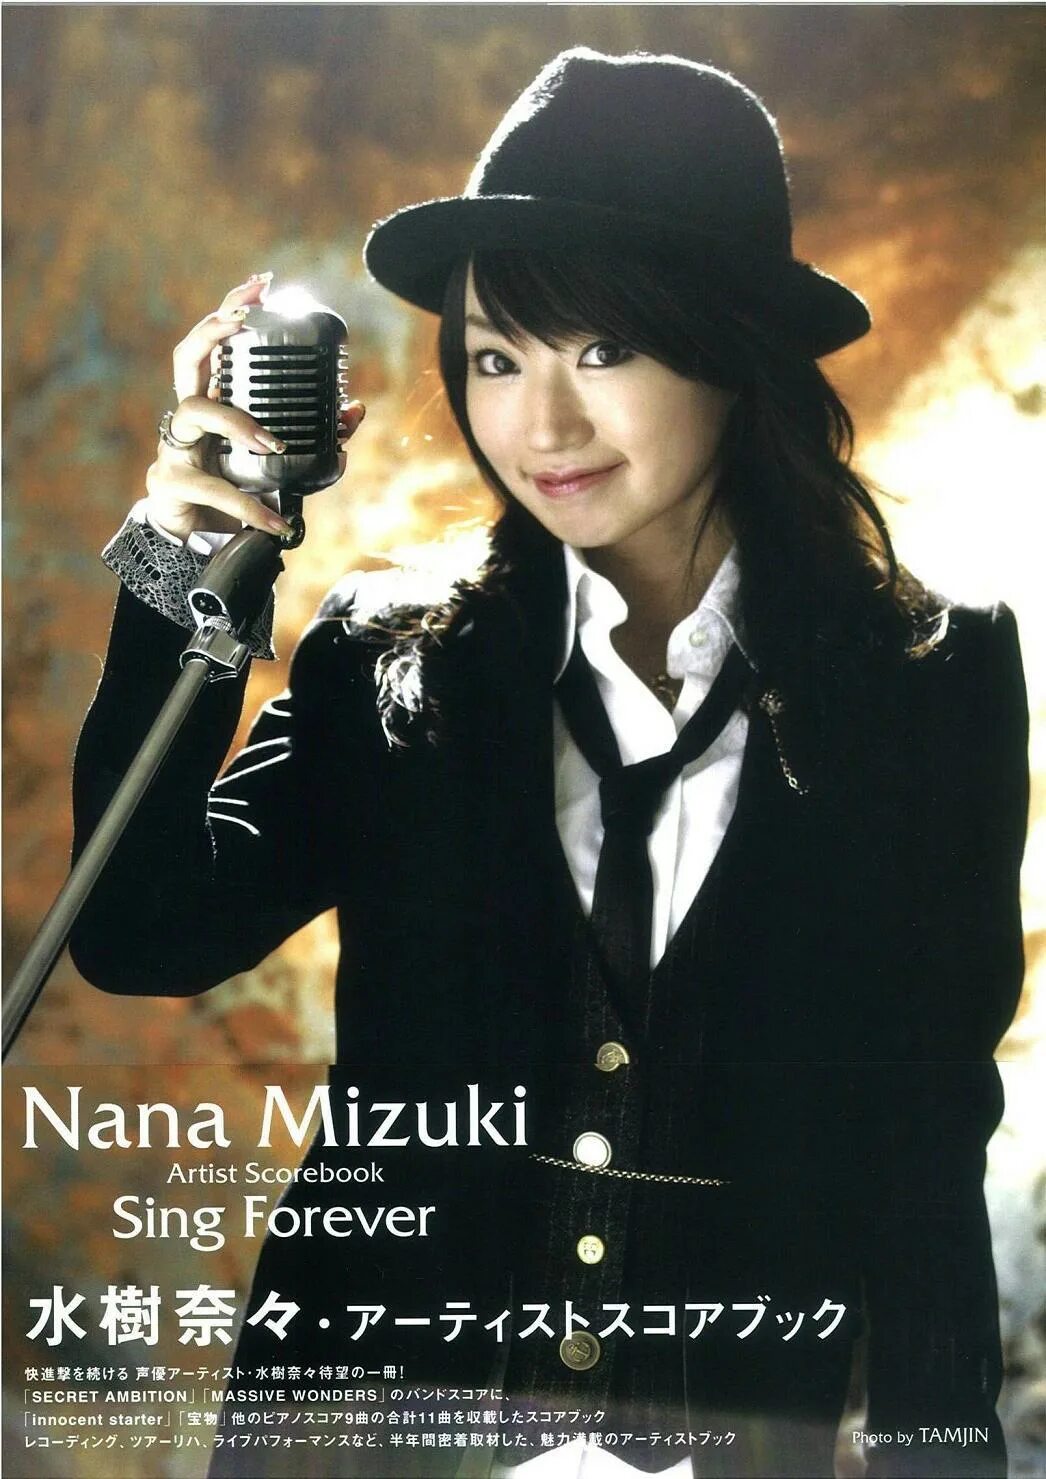 Sing forever. Nana Mizuki. Нанами и Мизуки. Nana Mizuki Discotheque. Massive Wonders Nana Mizuki.